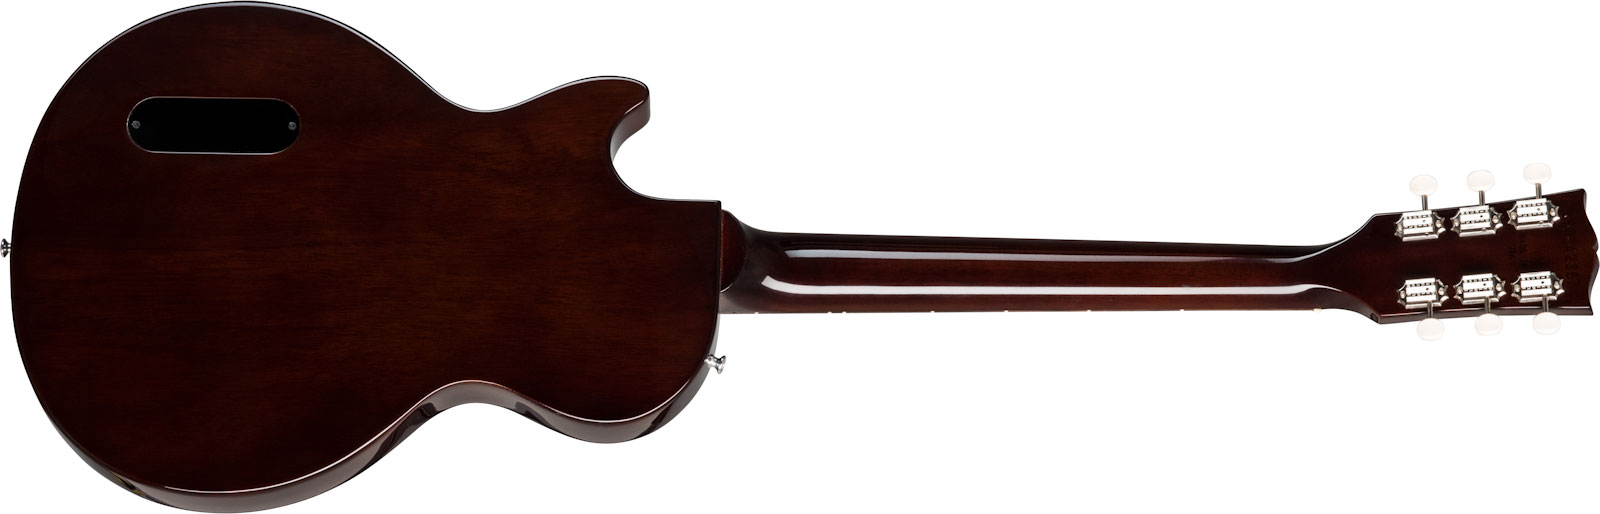 Gibson Les Paul Junior Original P90 Ht Rw - Vintage Tobacco Burst - Enkel gesneden elektrische gitaar - Variation 1